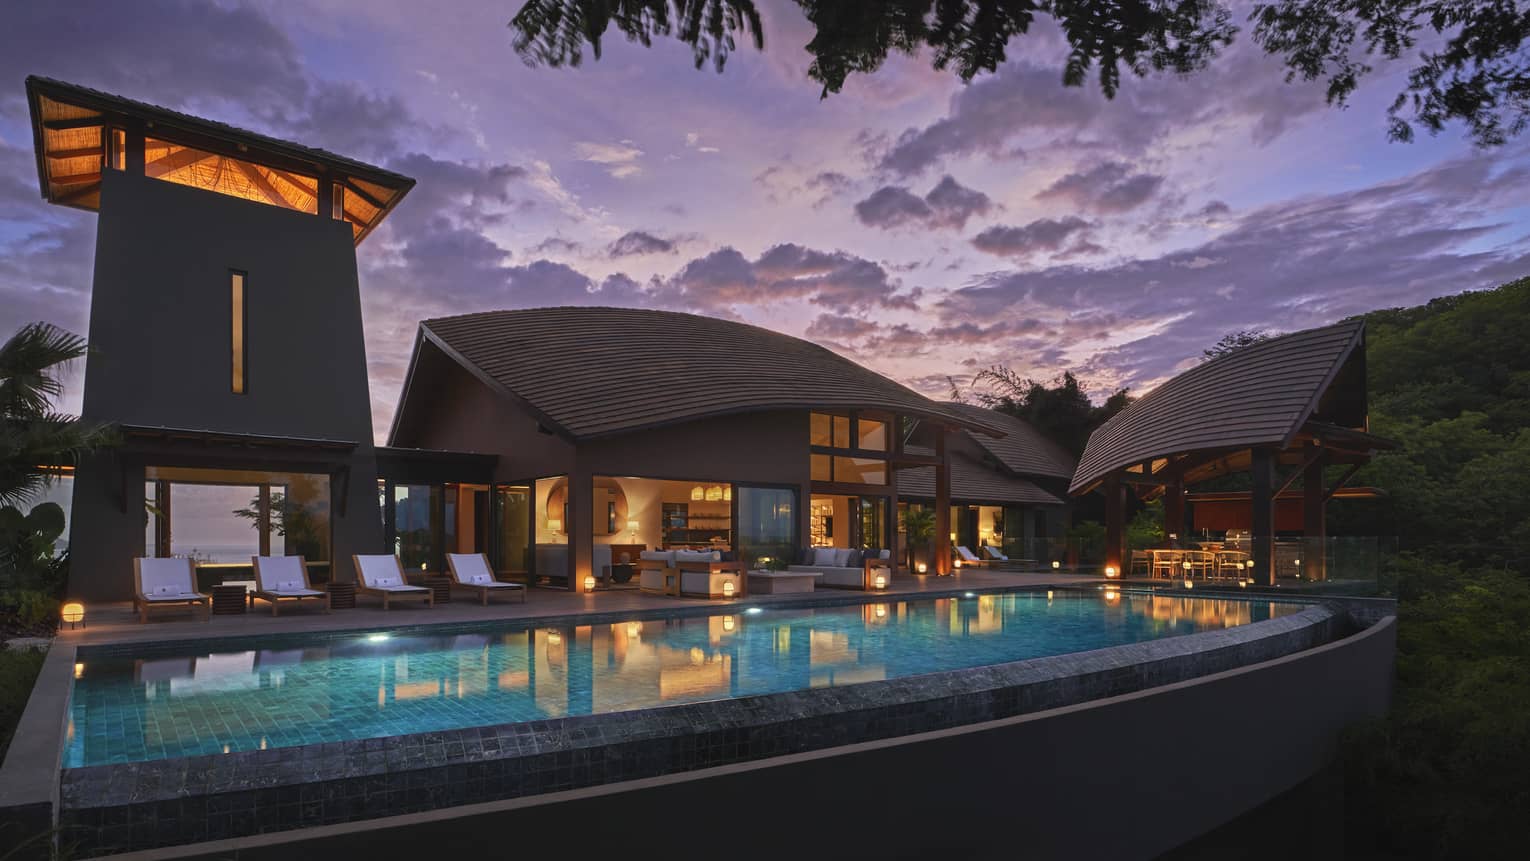 Private villa and pool illuminated at night